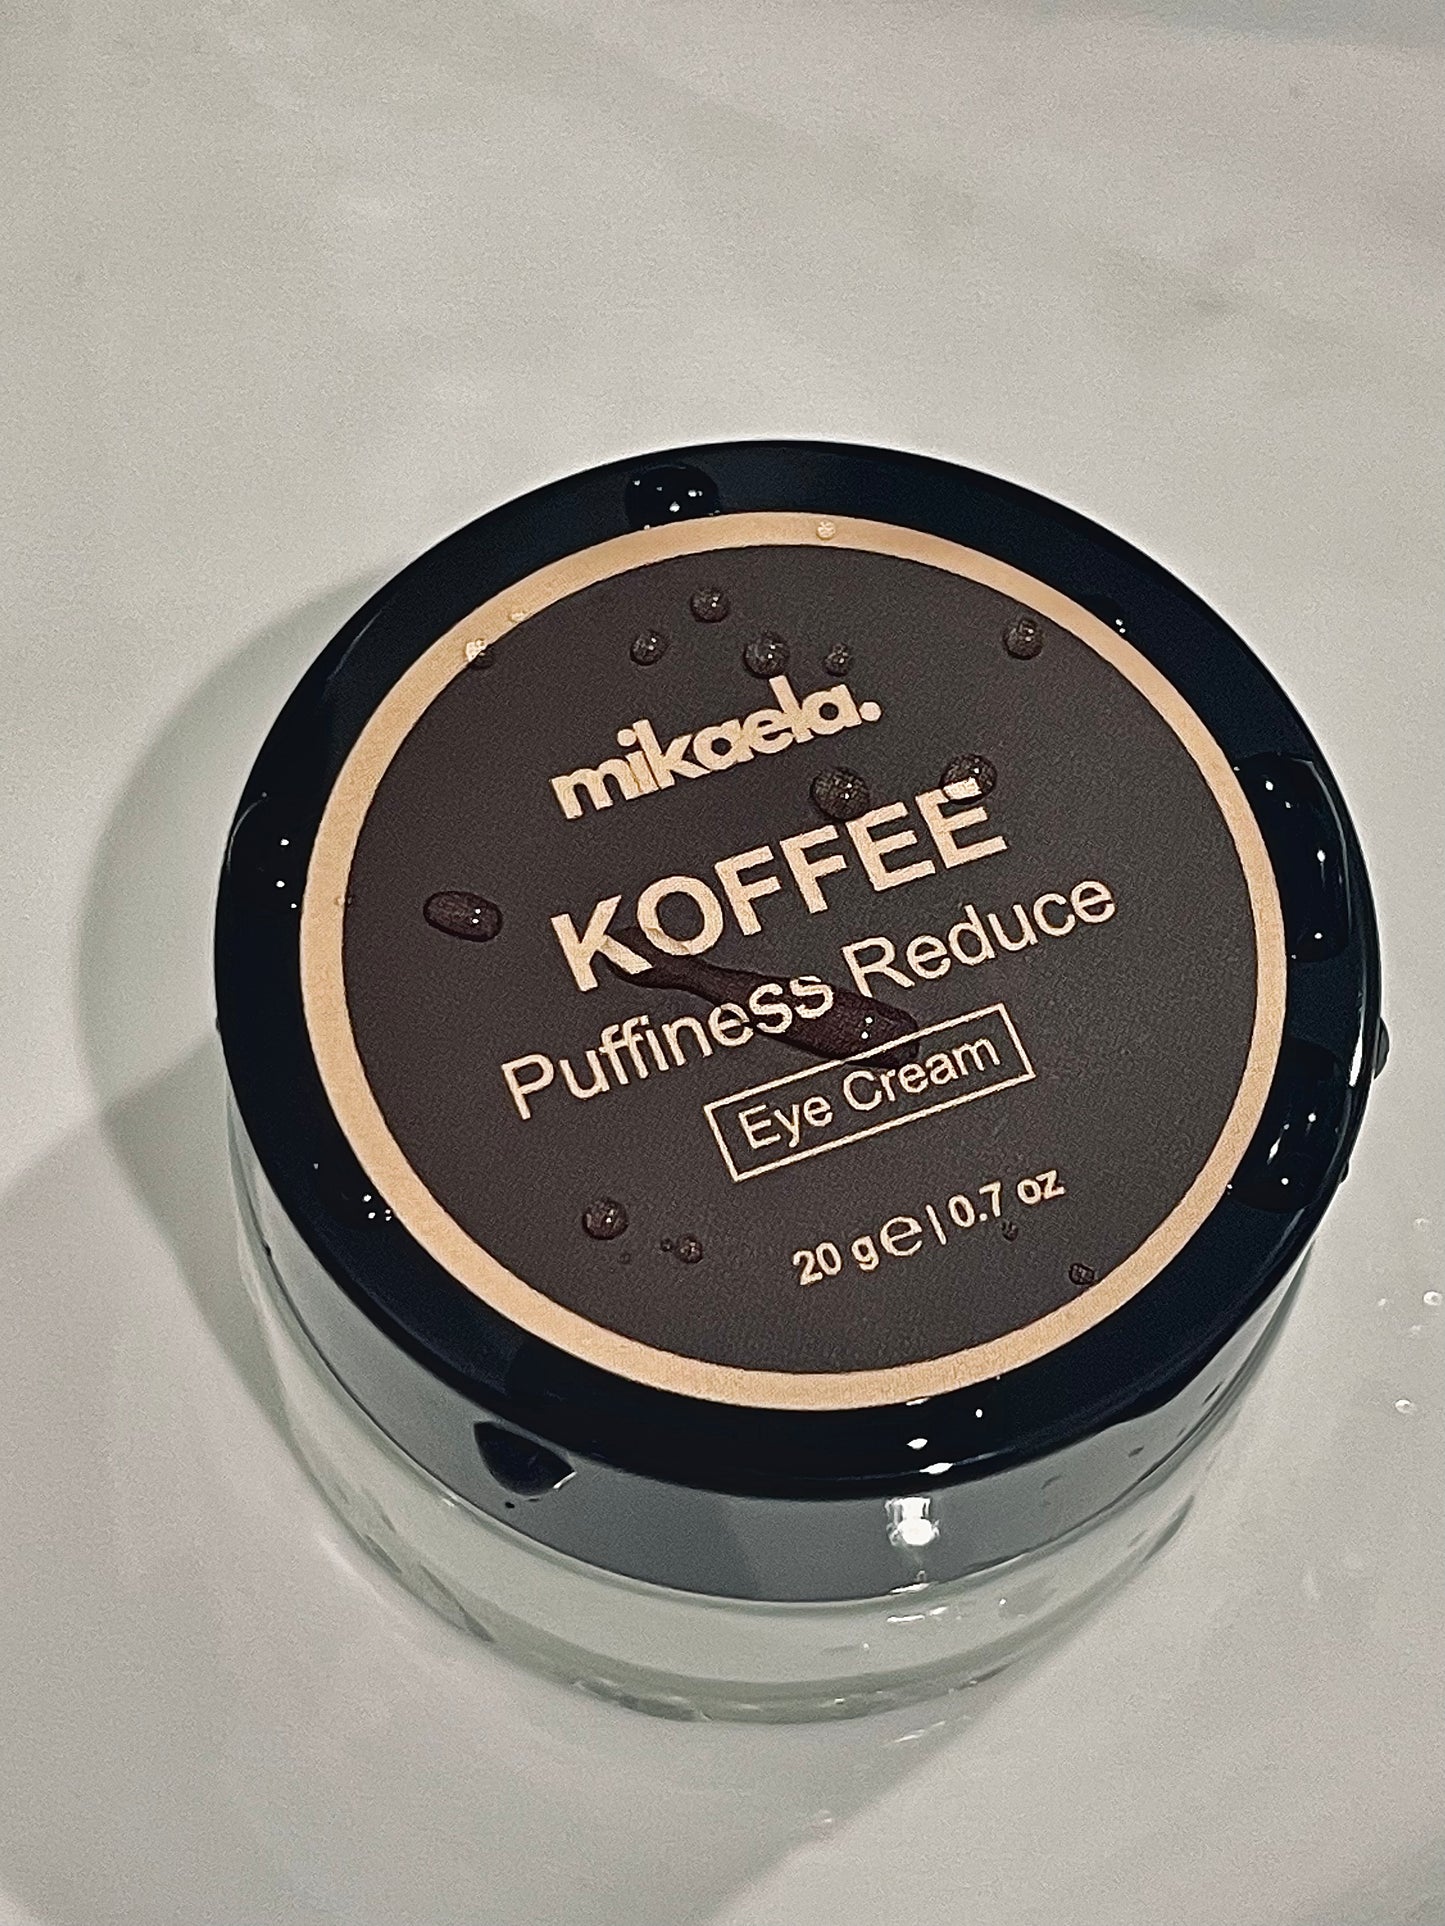 Mikaela Beauty - Koffee Reduce Eye Puffiness Cream